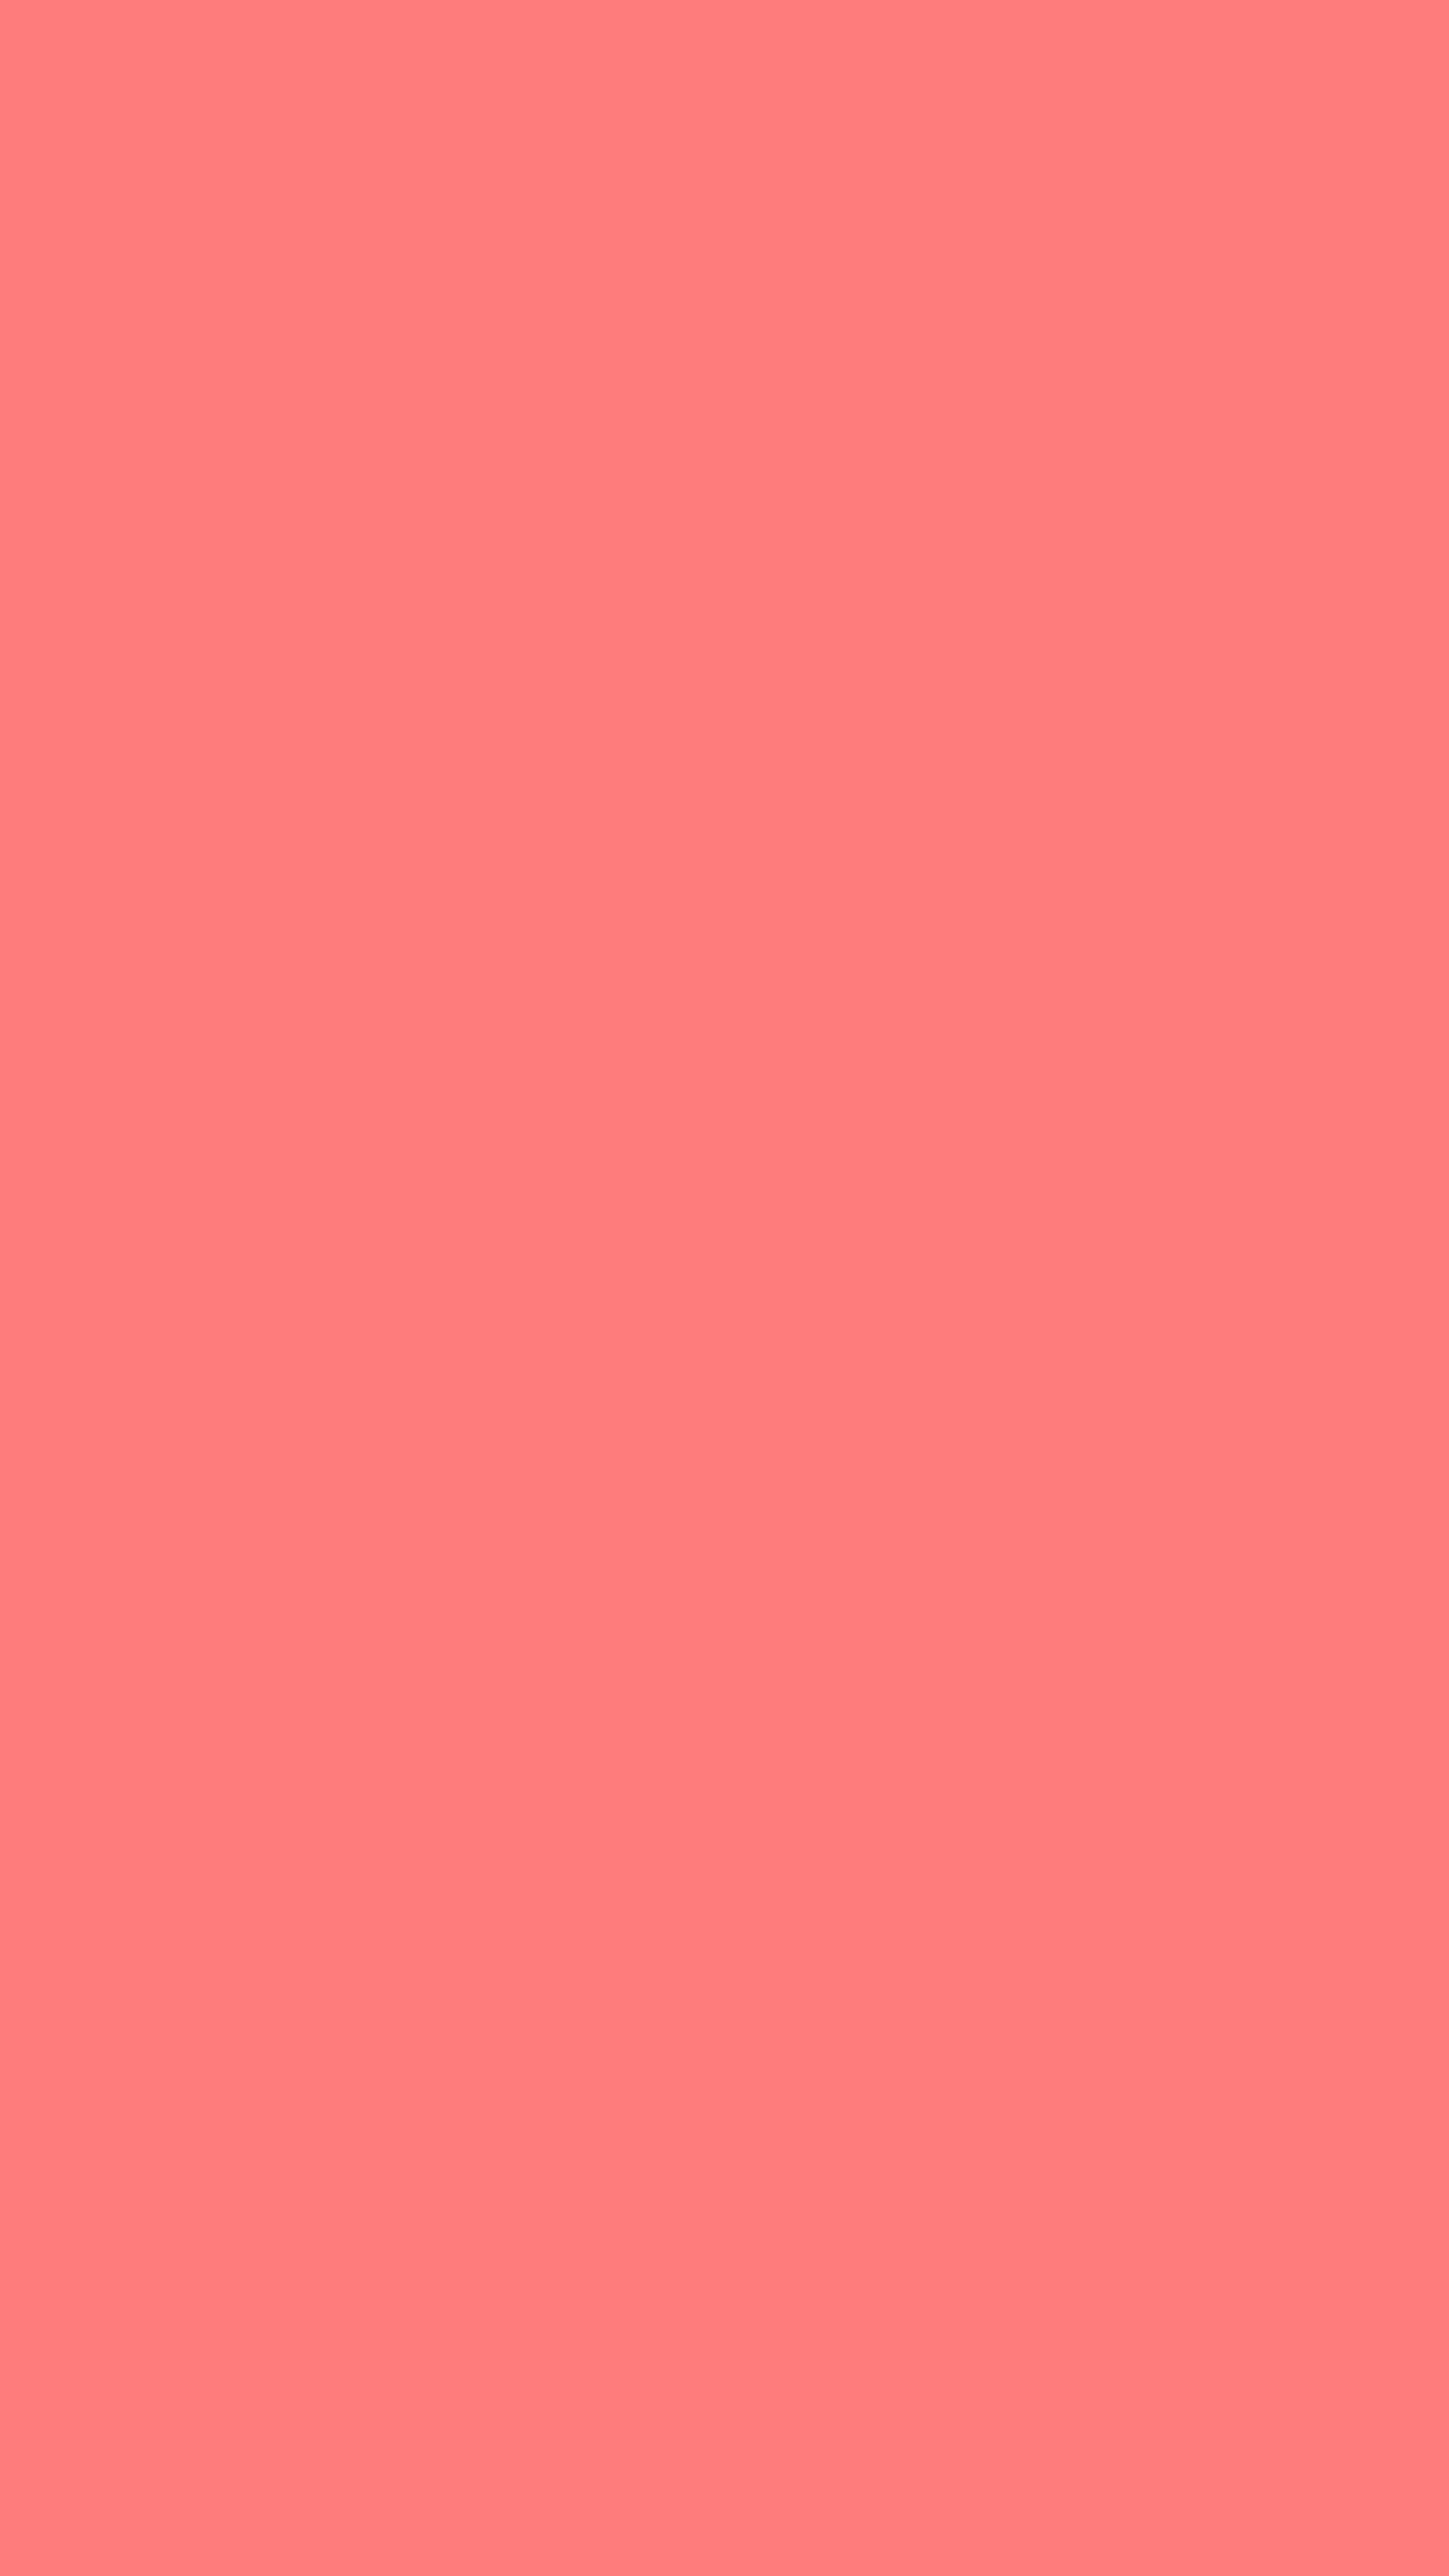 Bright Coral Pink Color Background ورق الجدران[9db69eb9346f4b46b0fb]